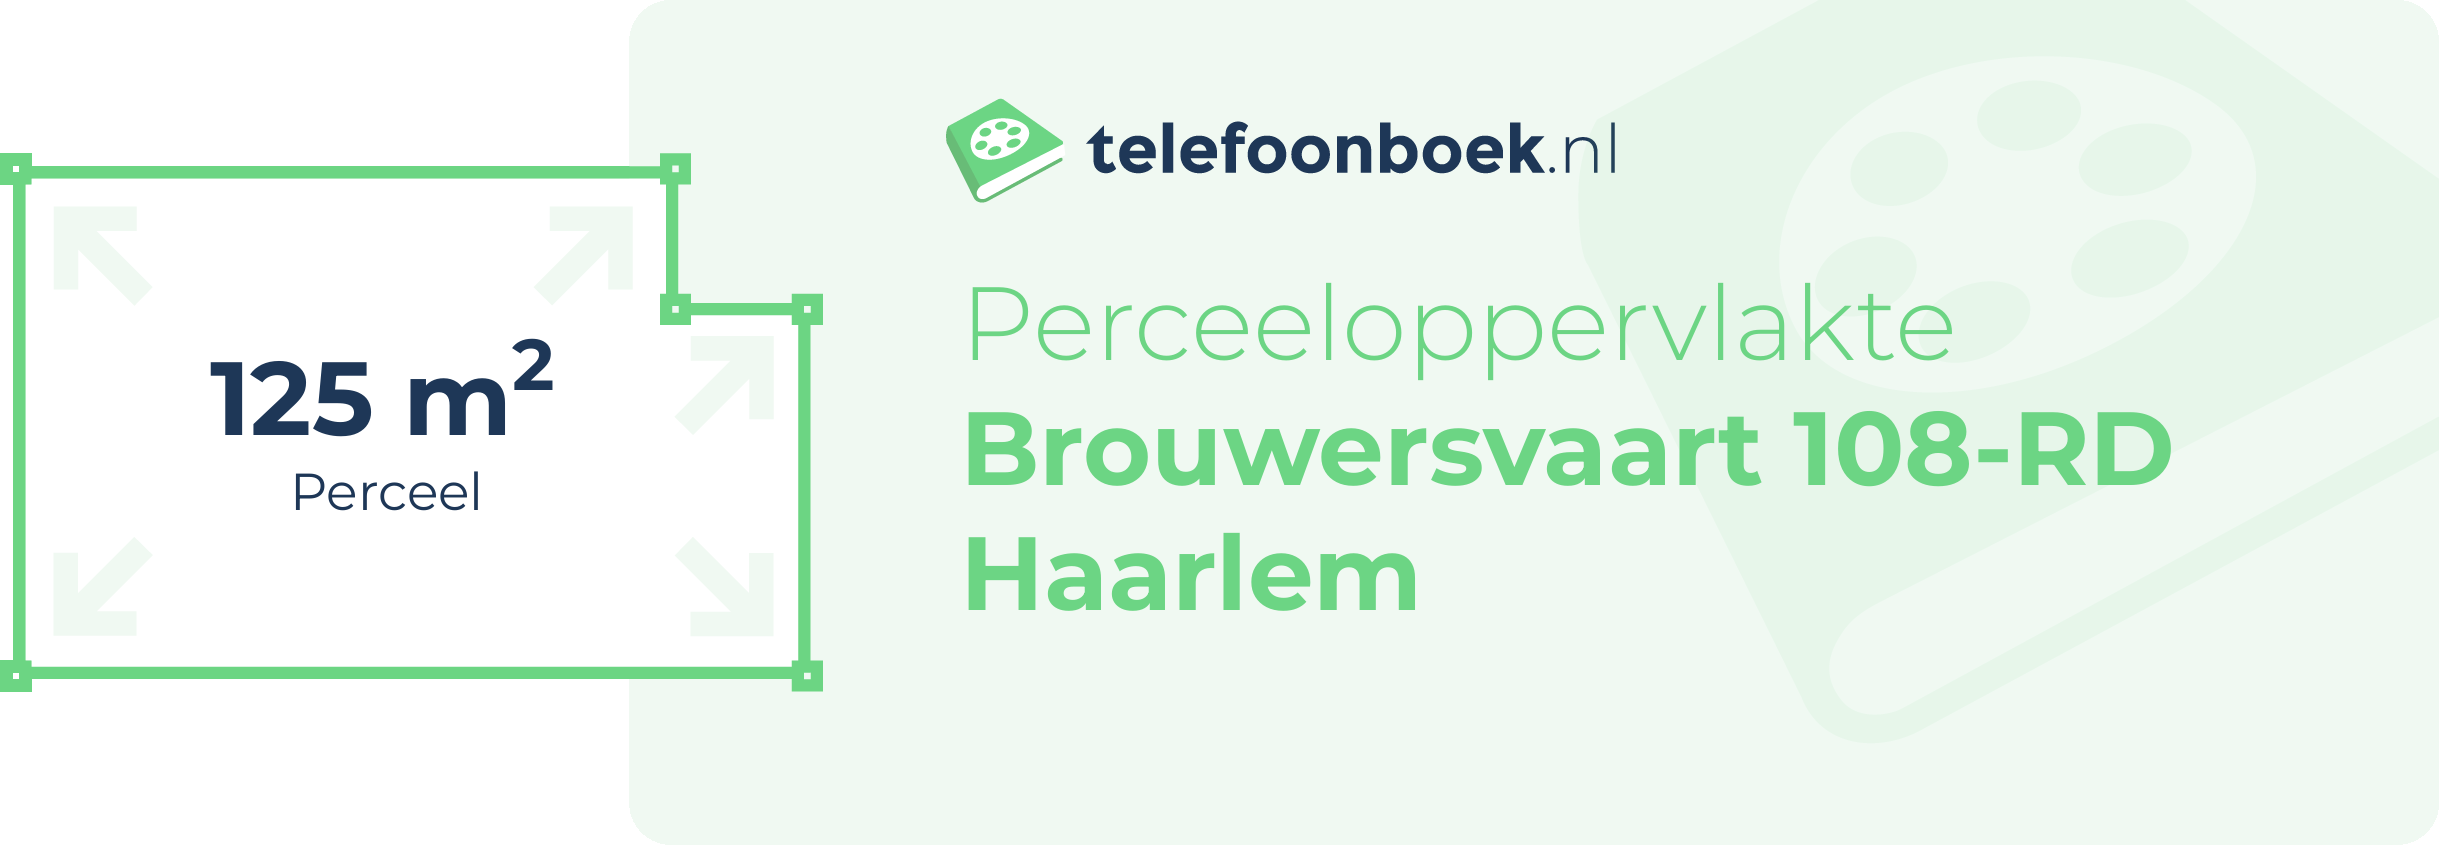 Perceeloppervlakte Brouwersvaart 108-RD Haarlem